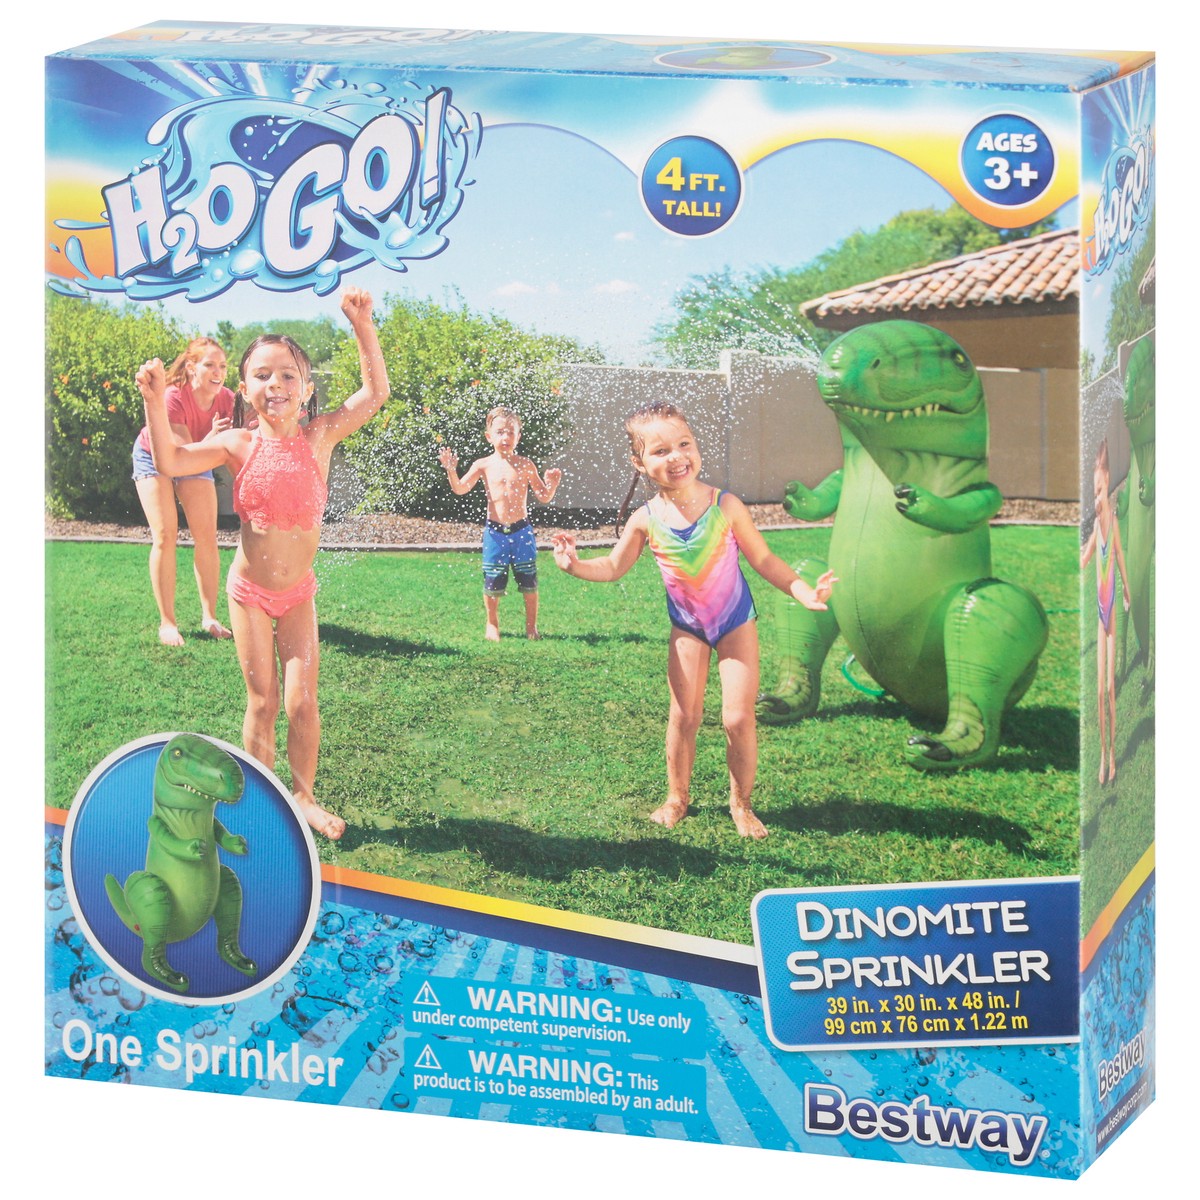 slide 3 of 9, H2O GO! 4 Feet Dinomite Sprinkler 1 ea, 1 ea